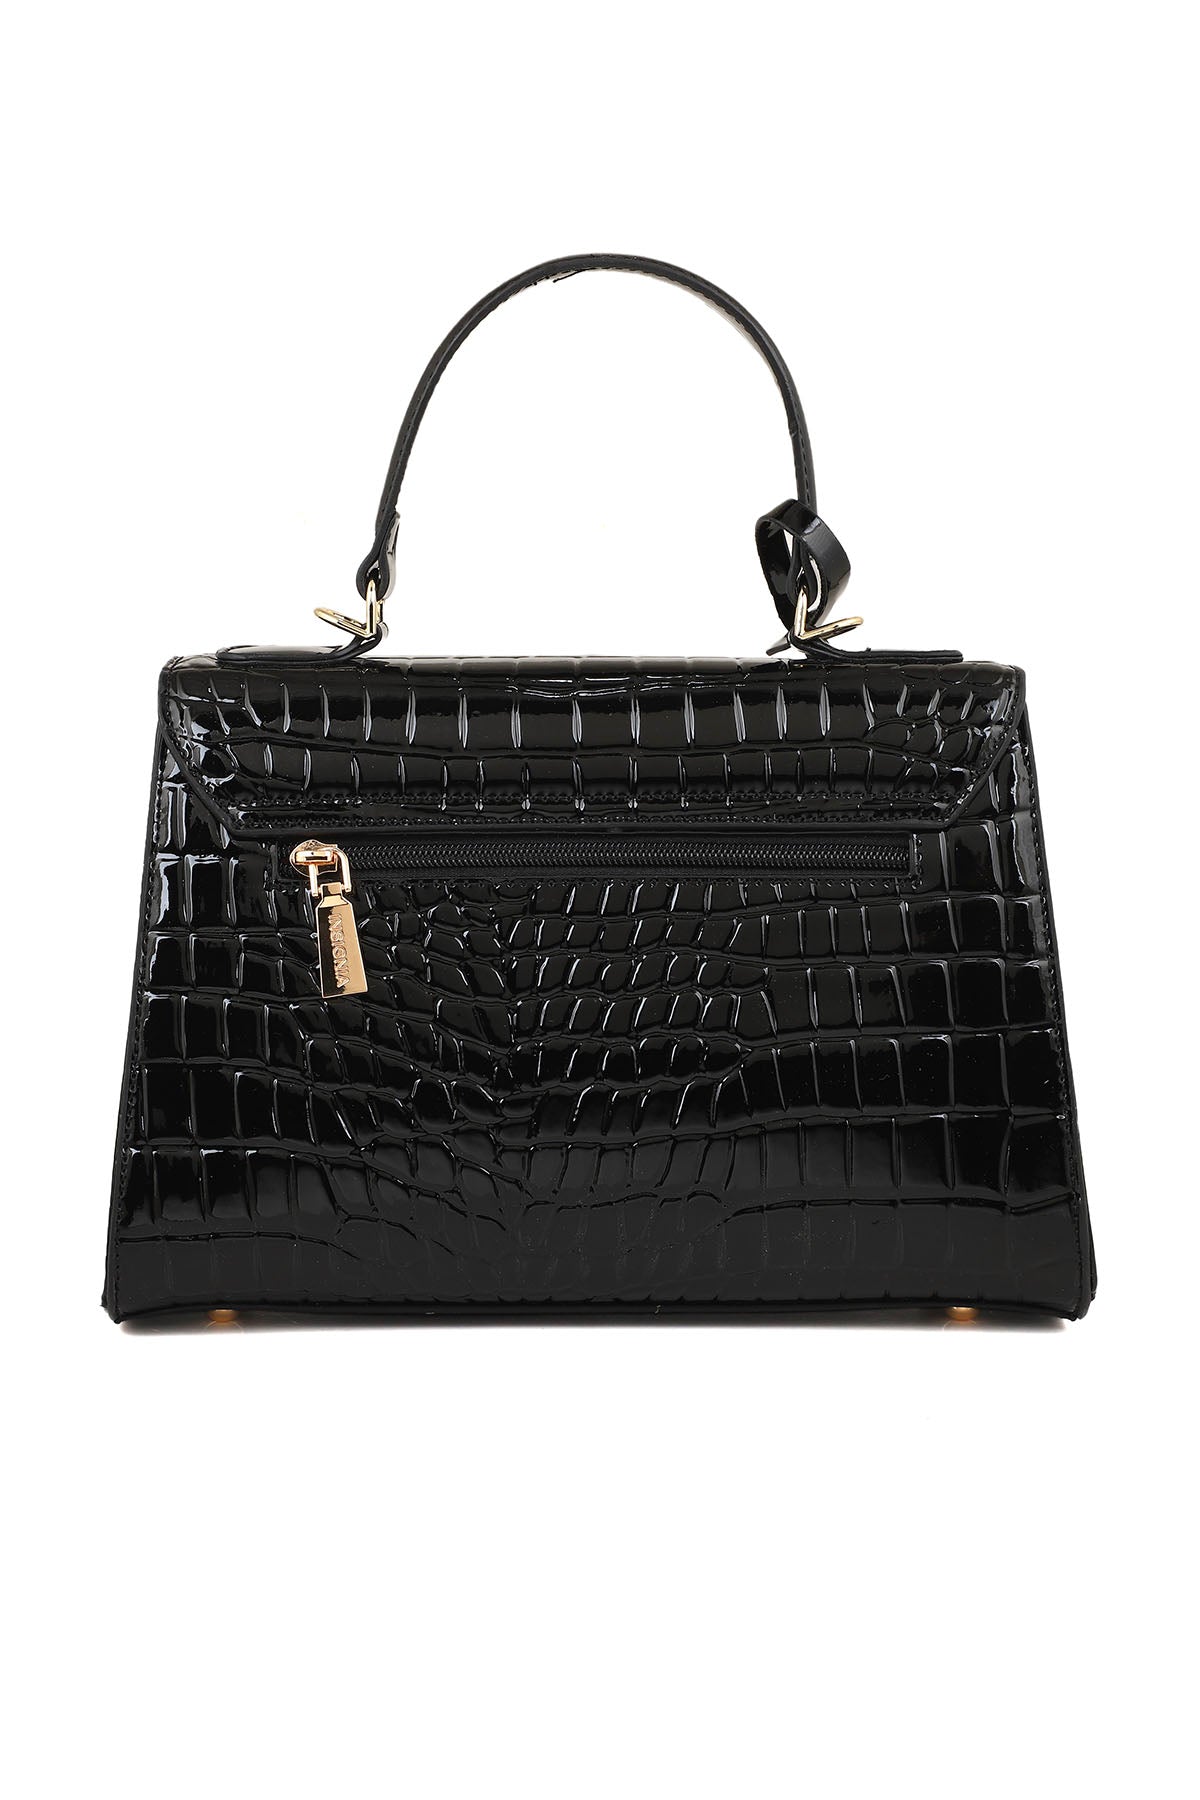 Top Handle Hand Bags B15090-Black